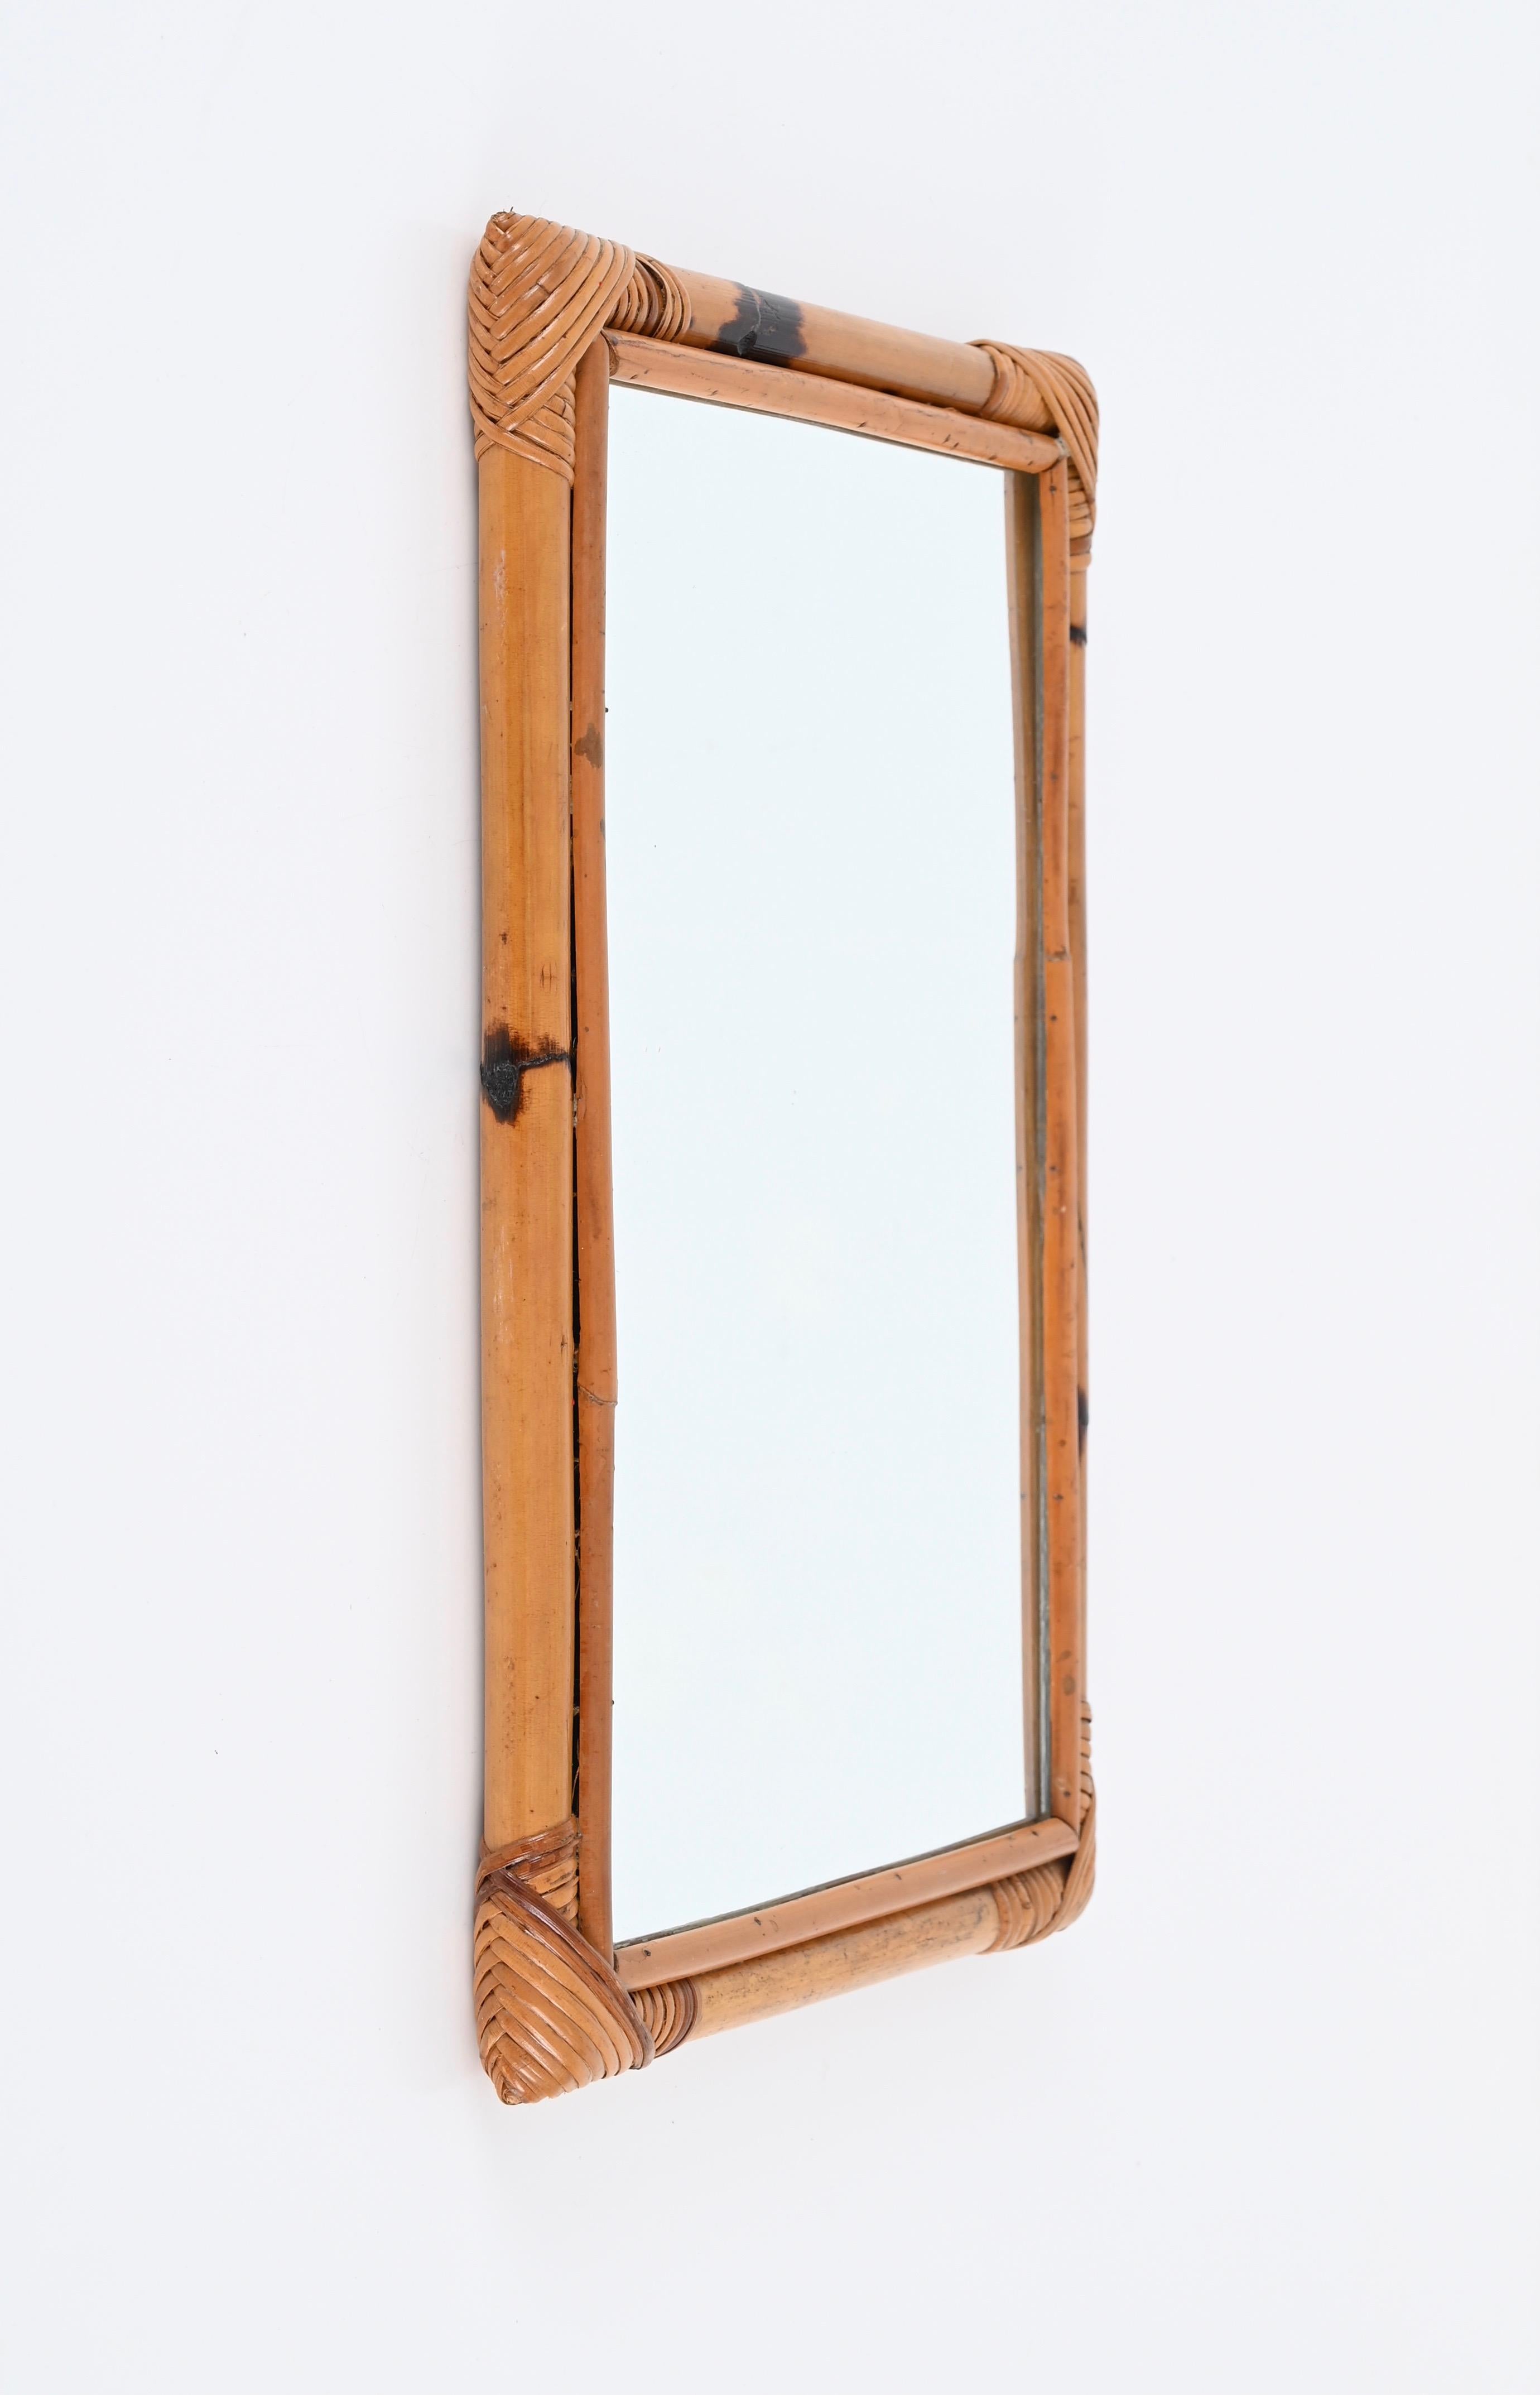 Italian Mid-Century Rattan, Bamboo and Wicker Rectangular Mirror, Italy 1970s For Sale